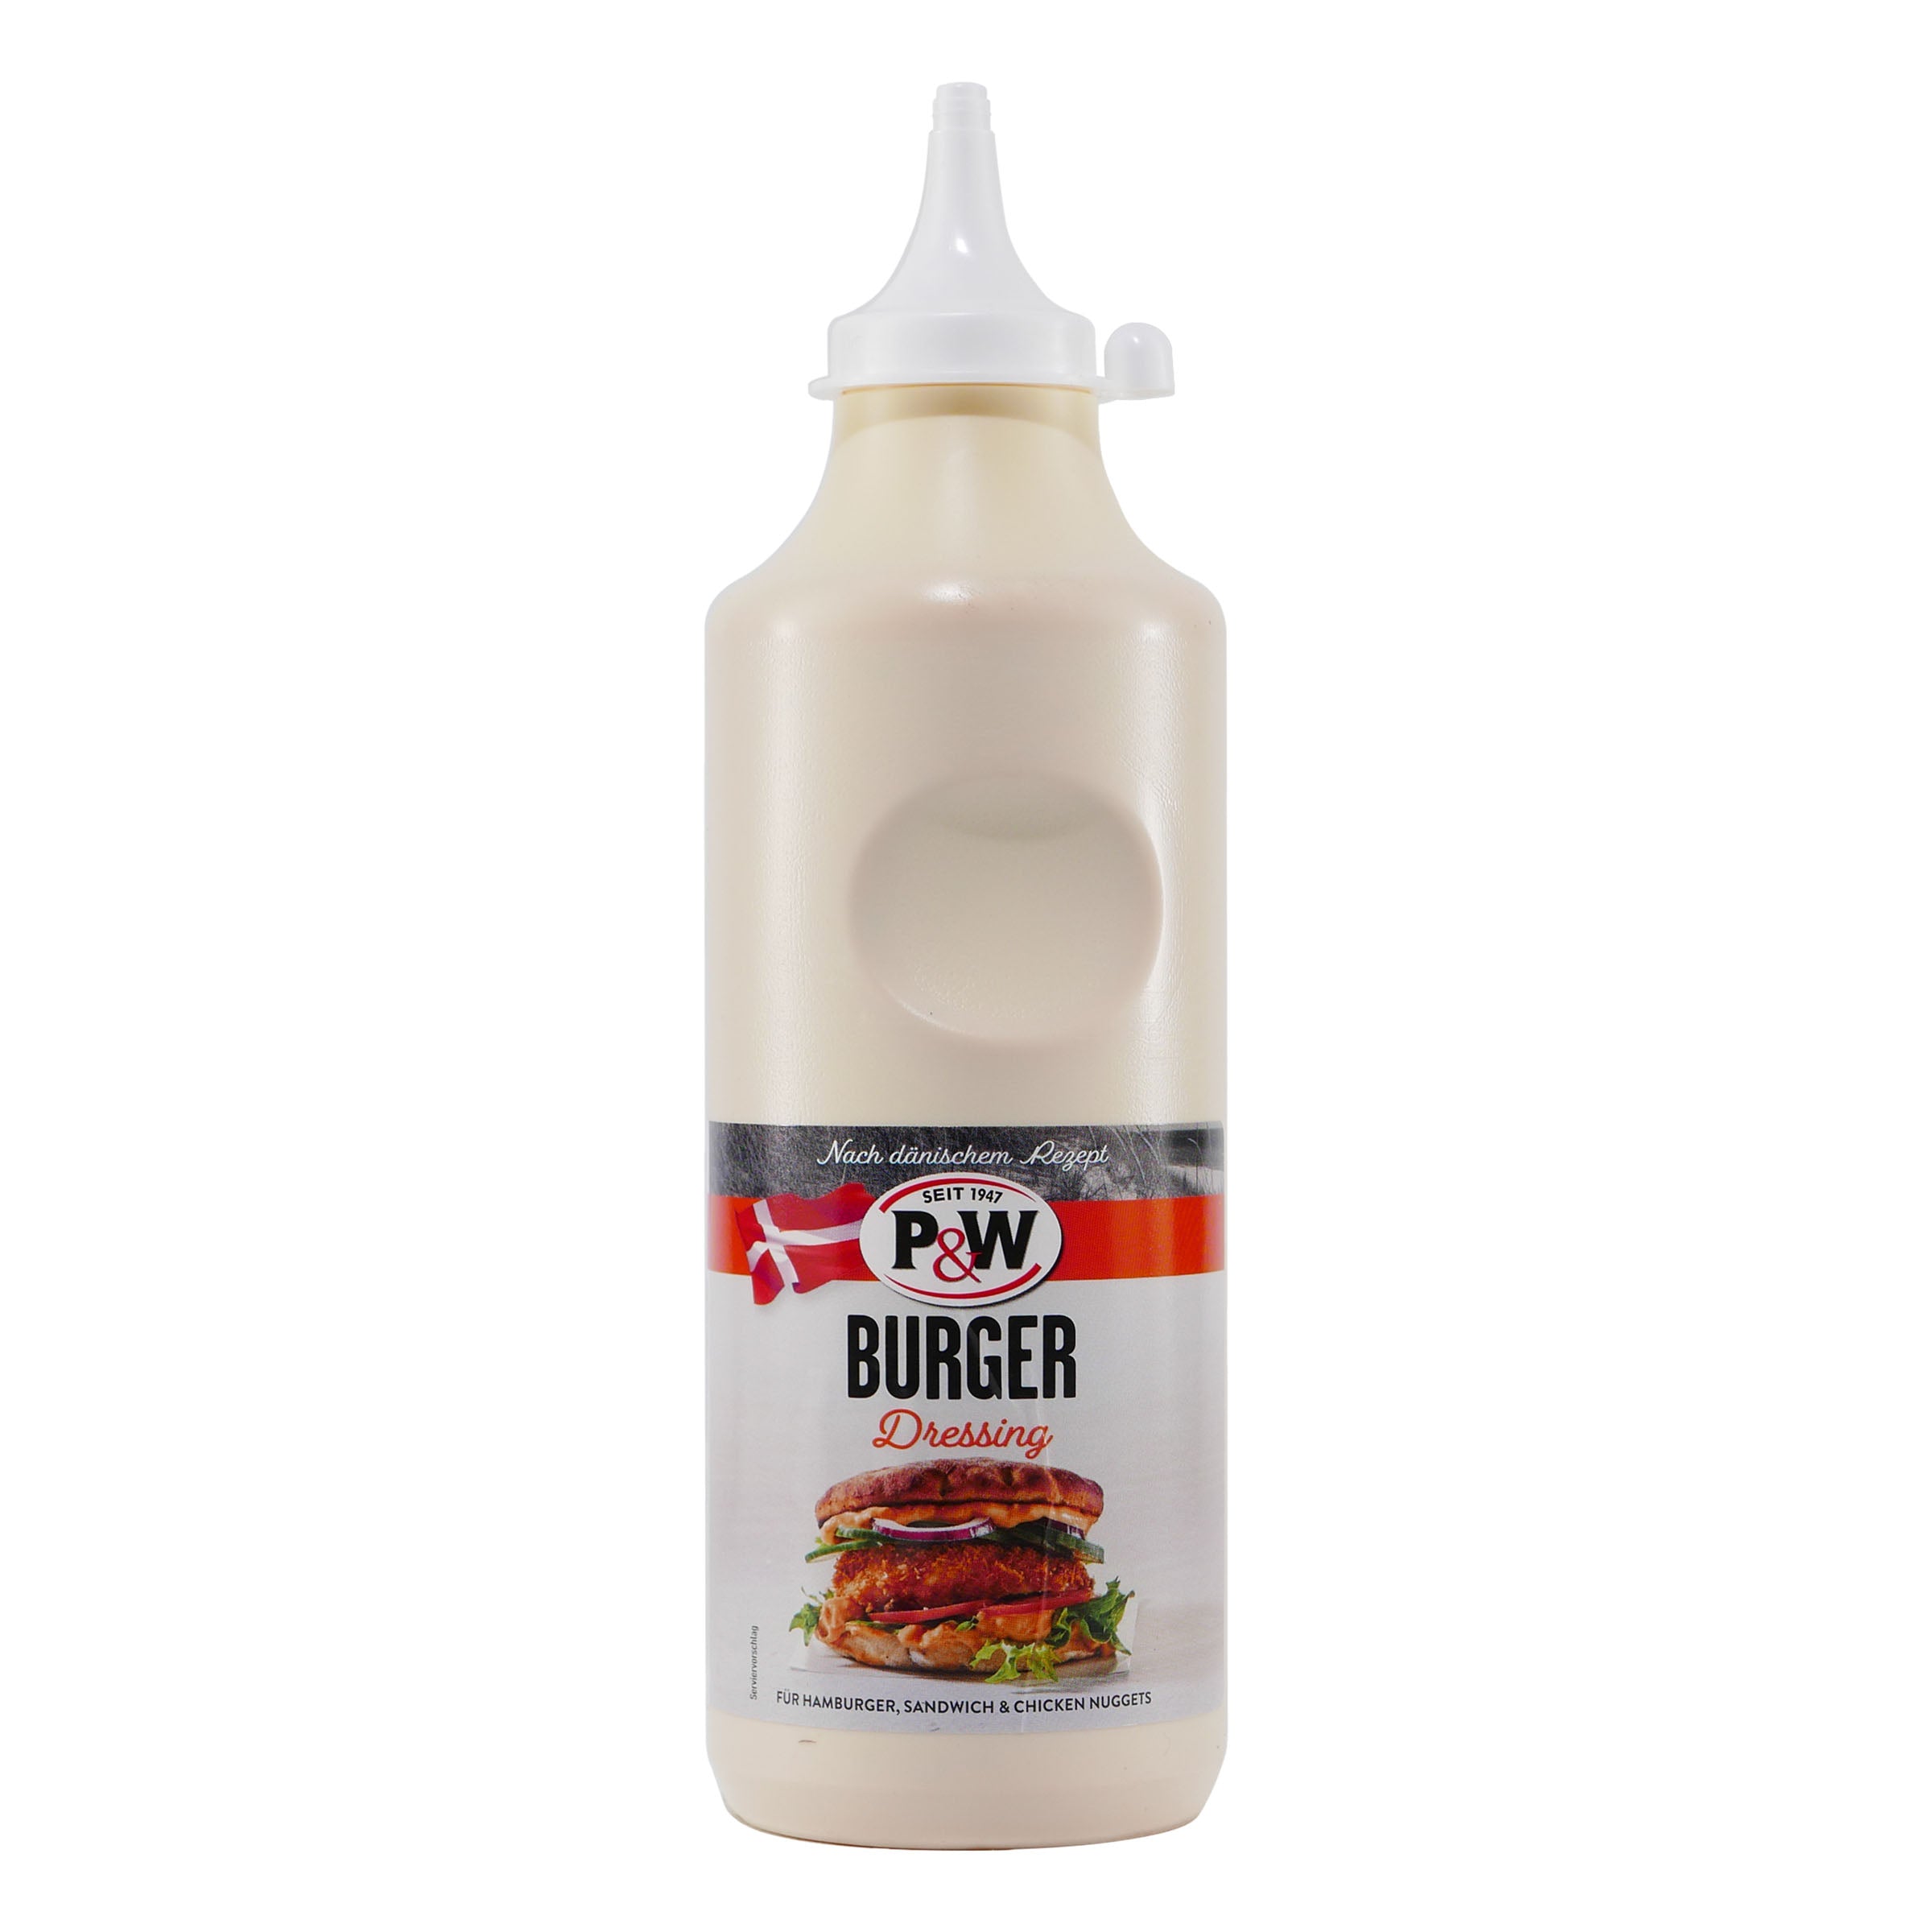 P&W Burger Dressing (6 x 900g)